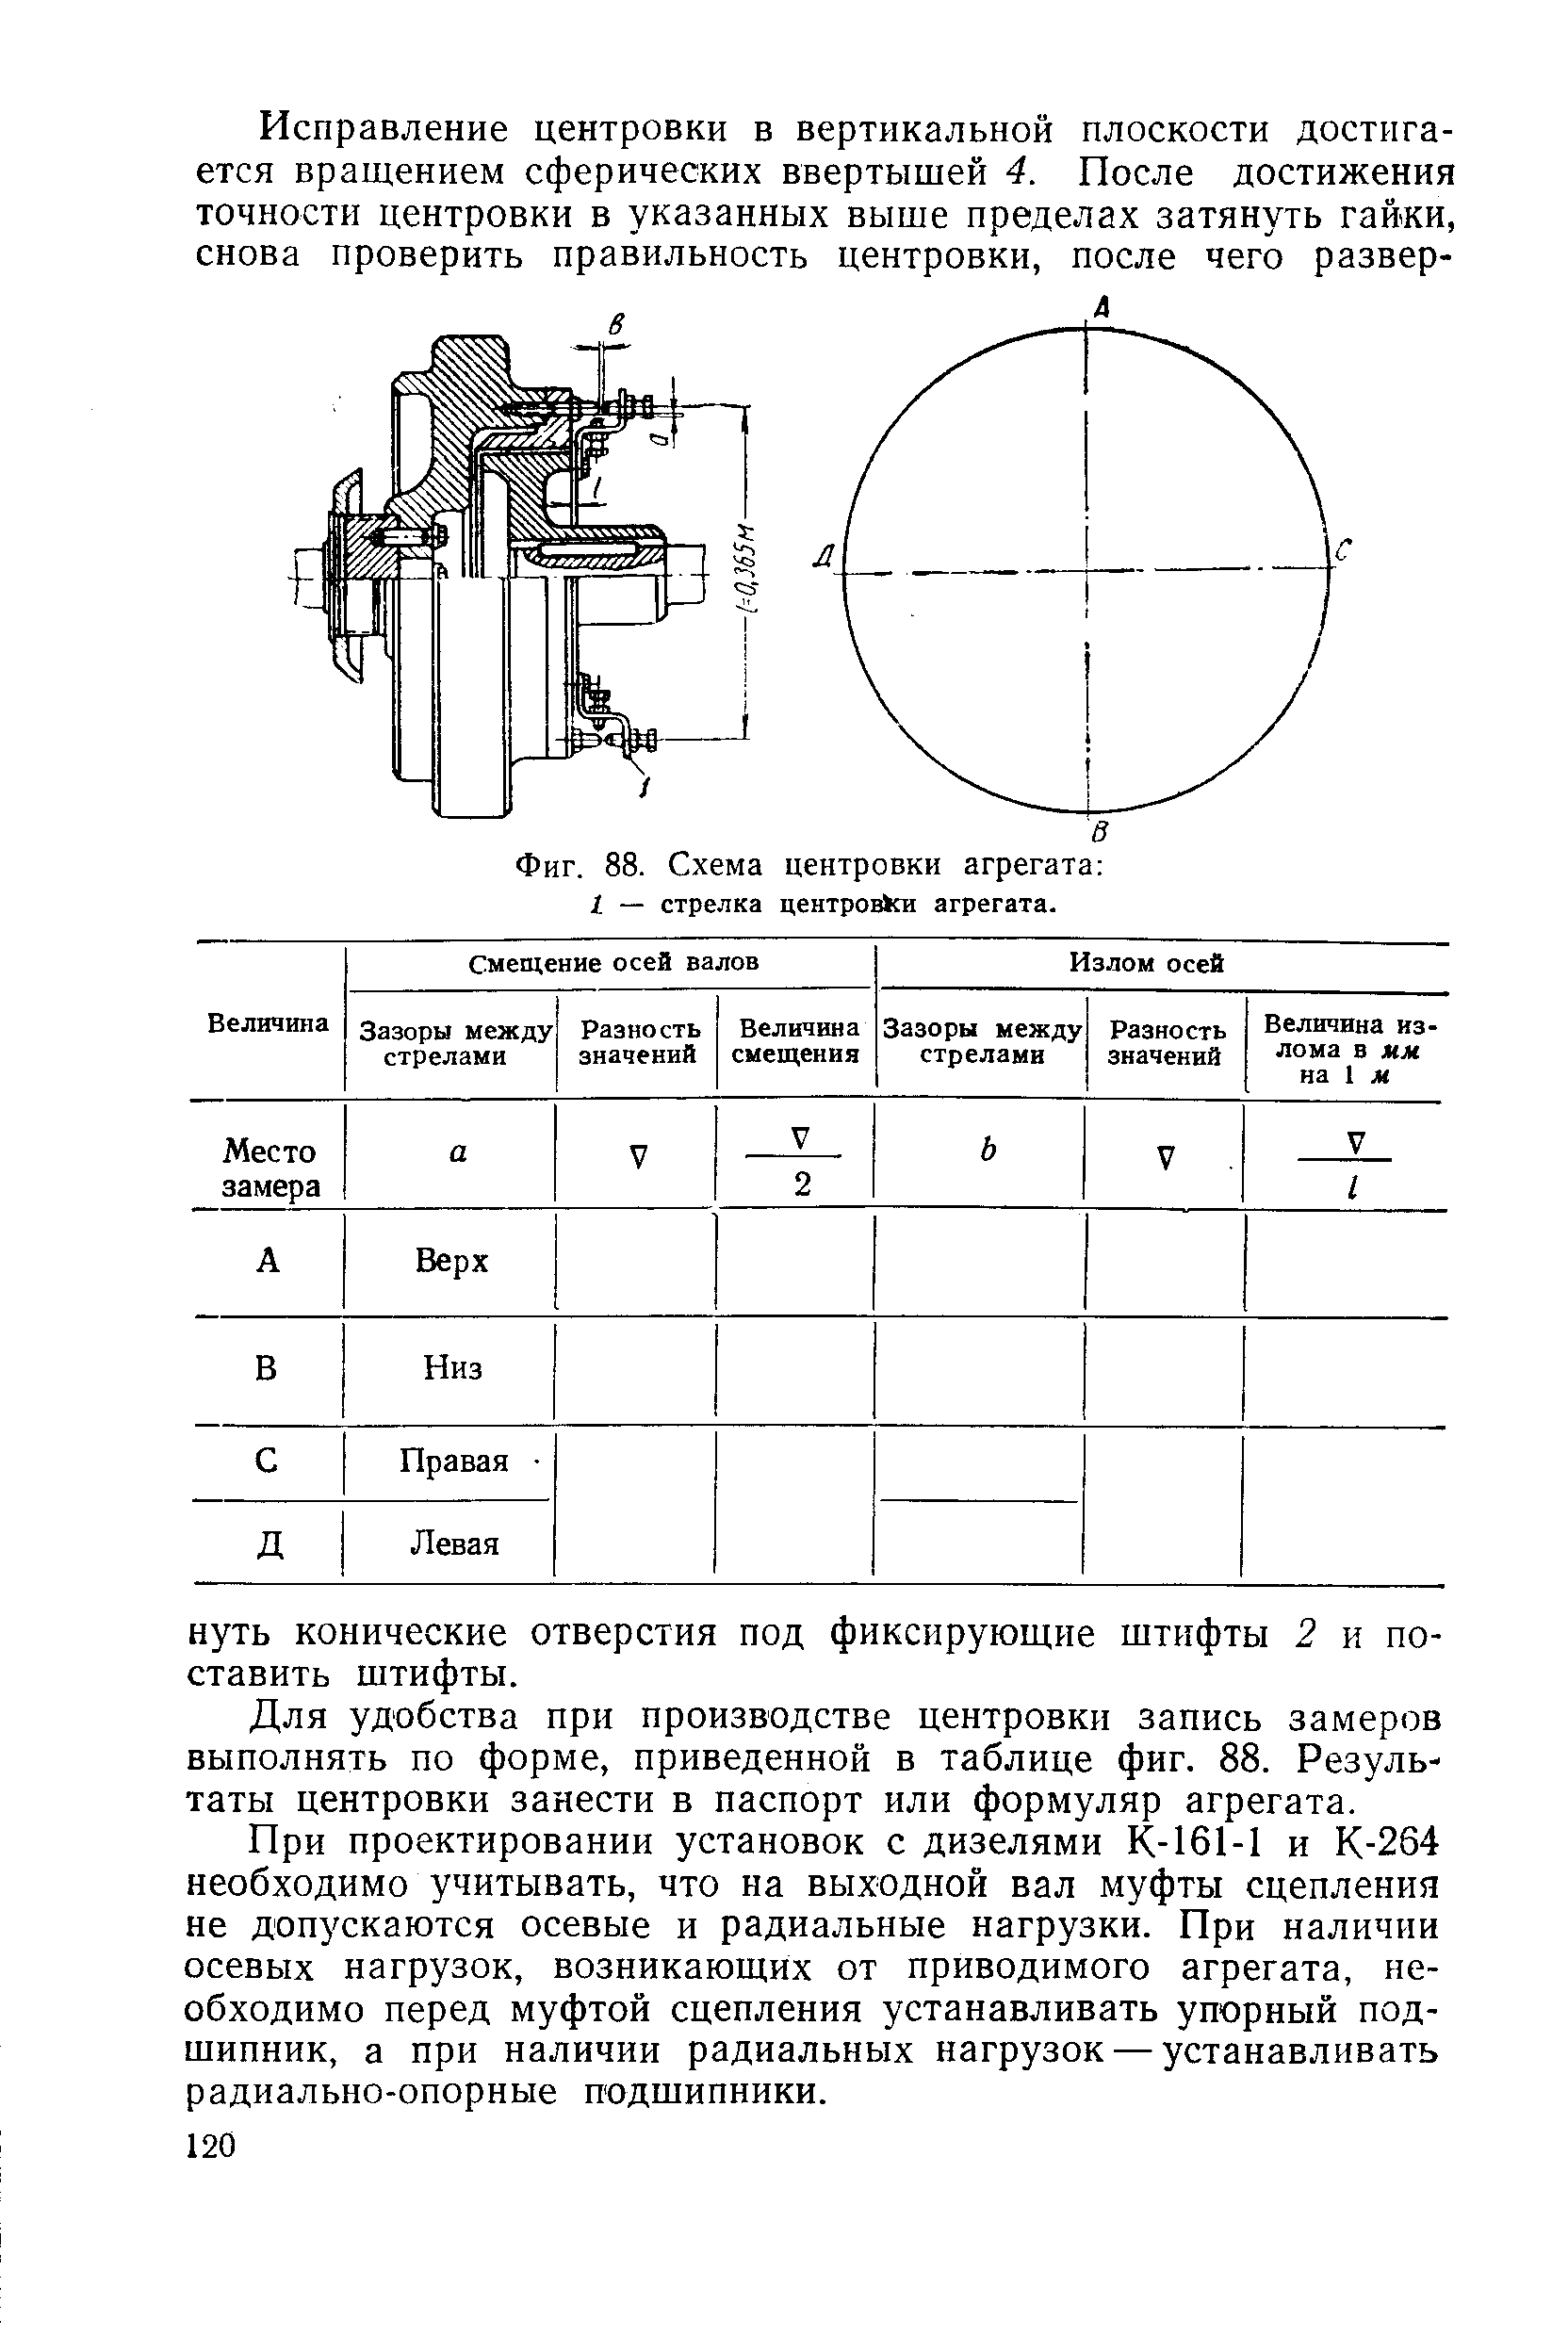 Фиг. 88. Схема центровки агрегата I стрелка центровки агрегата.
